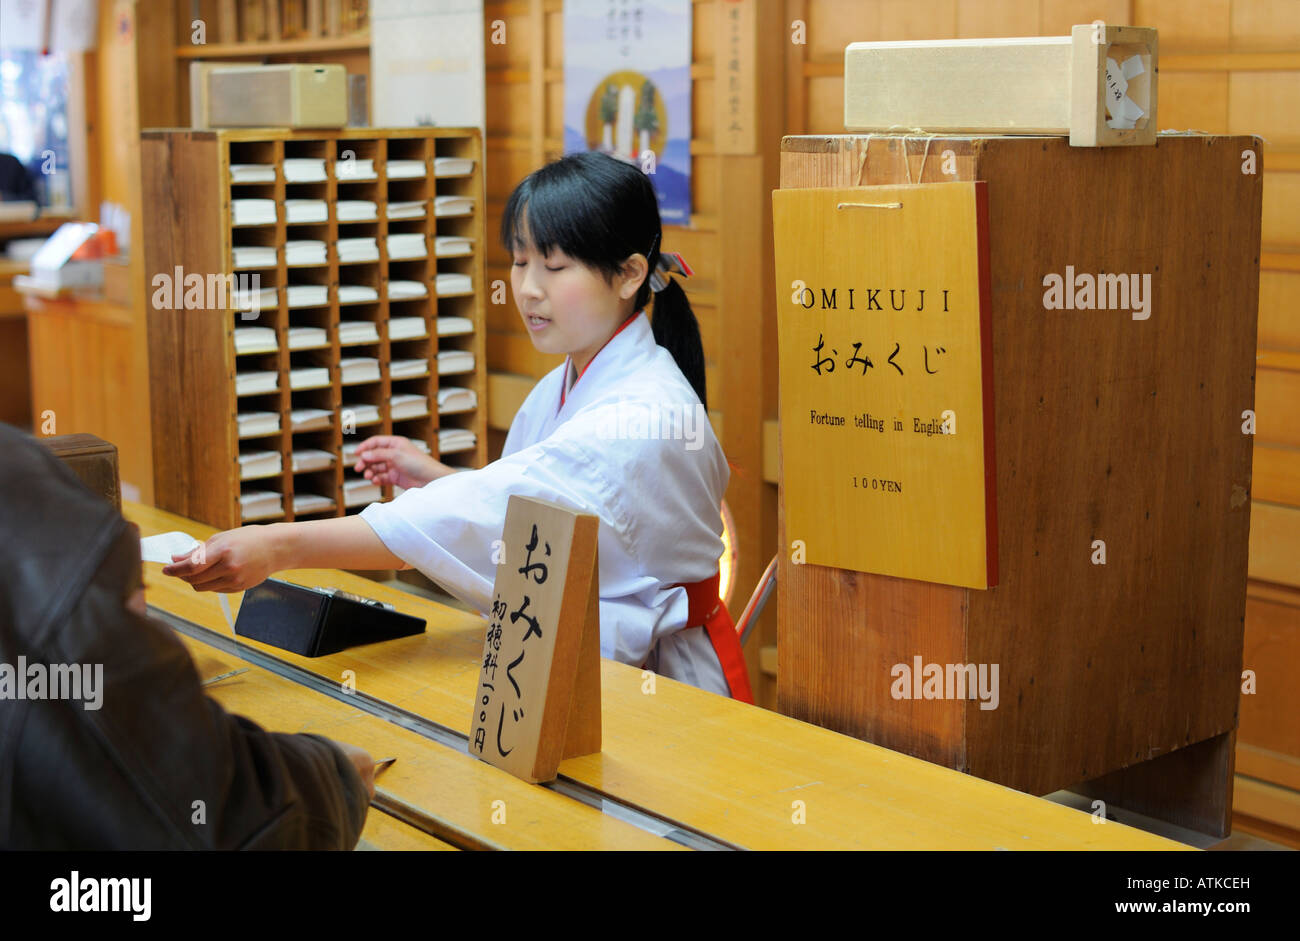 Omikuji Fortune Telling at a Shinto shrine, Kamakura JP Stock Photo